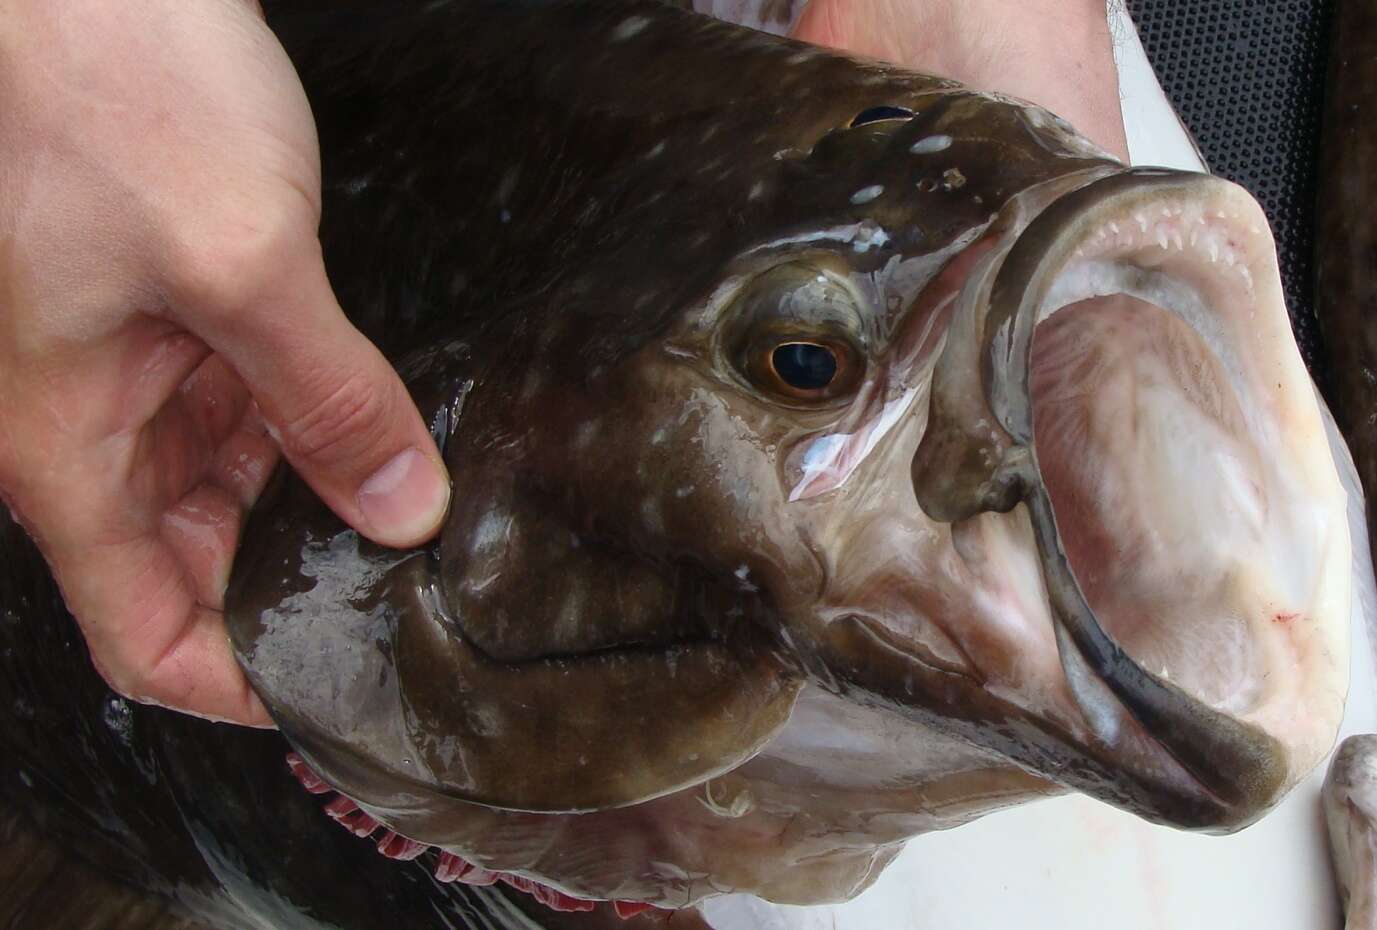 Image of Black rockfish